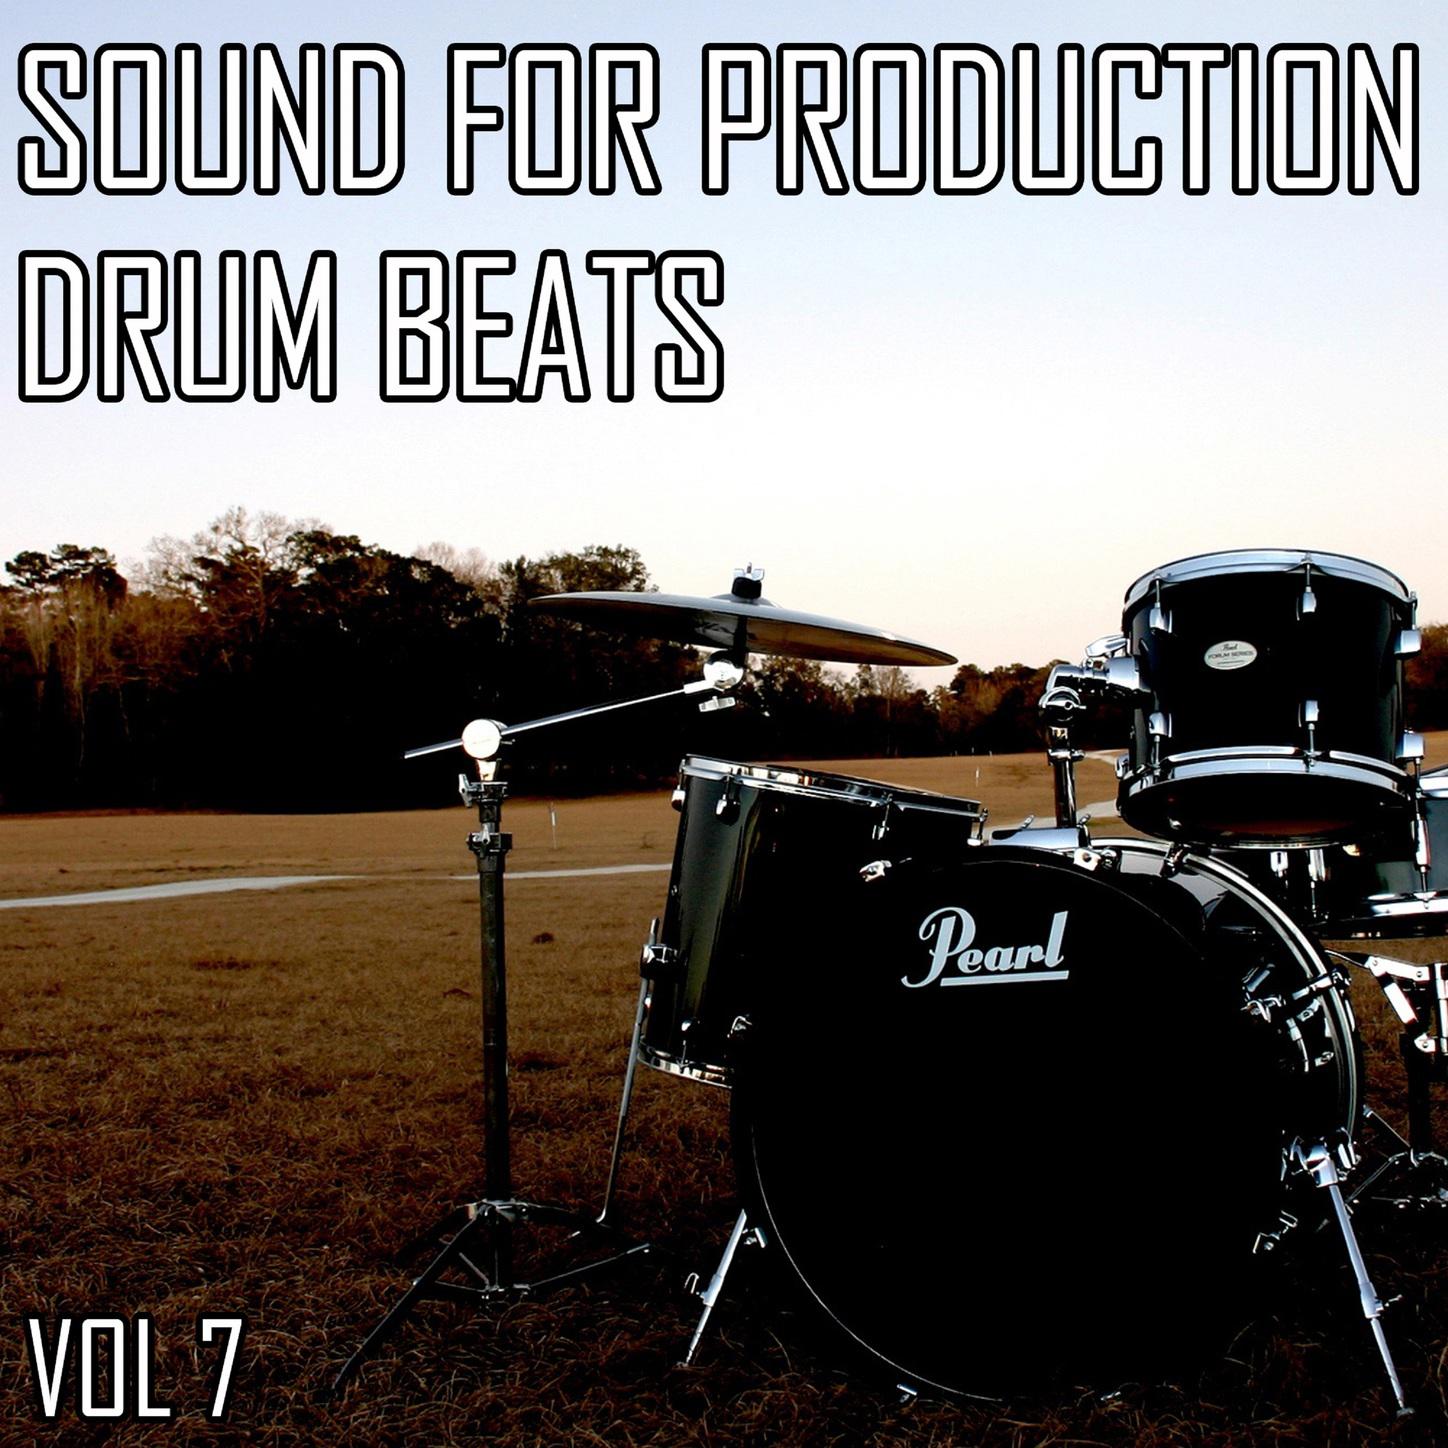 Sound For Production Drum Beats, Vol. 7